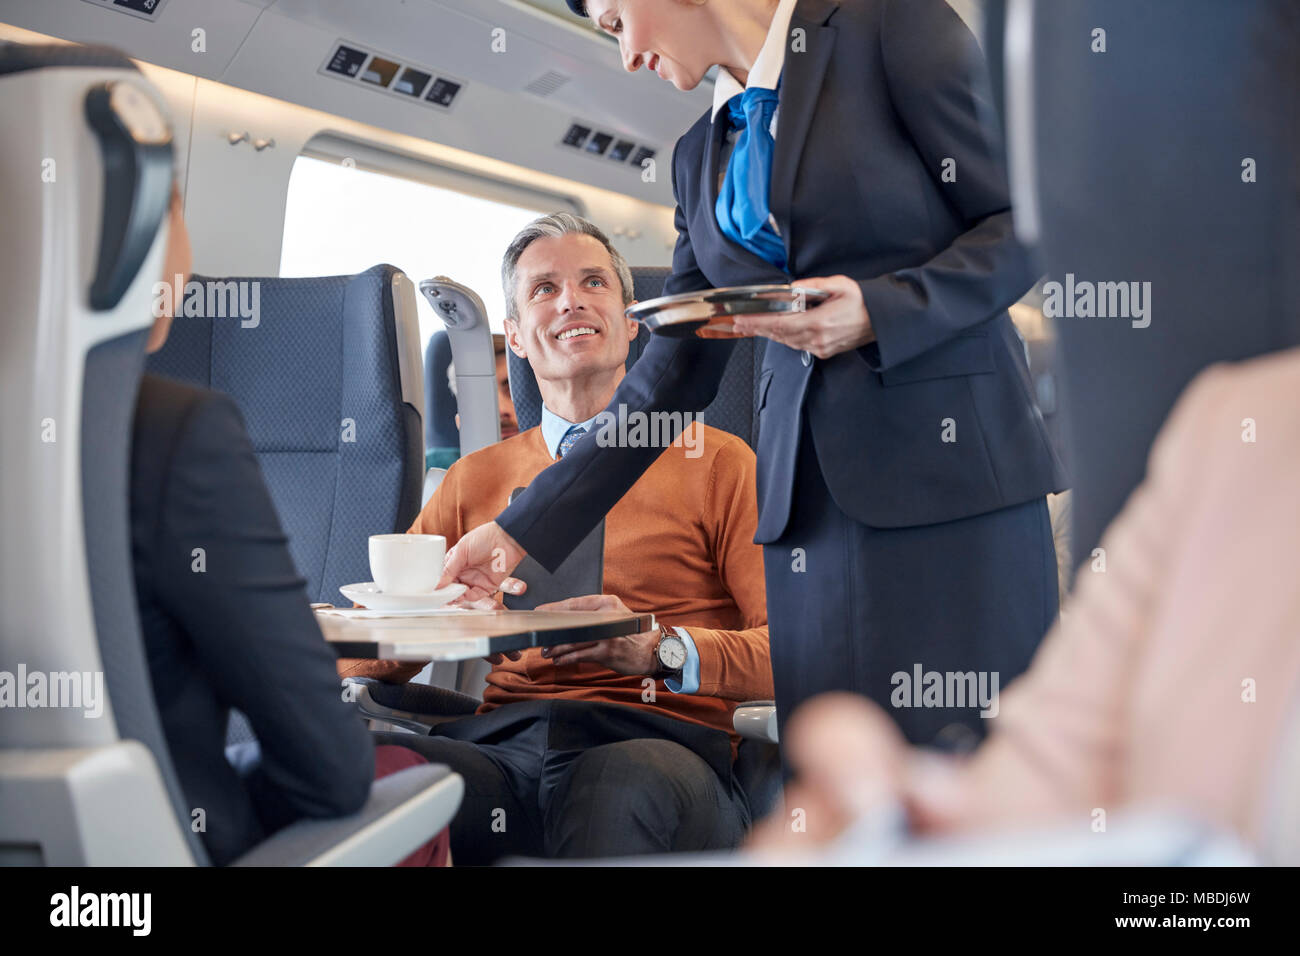 Attendant serving coffee to businessman on passenger train Stock Photo